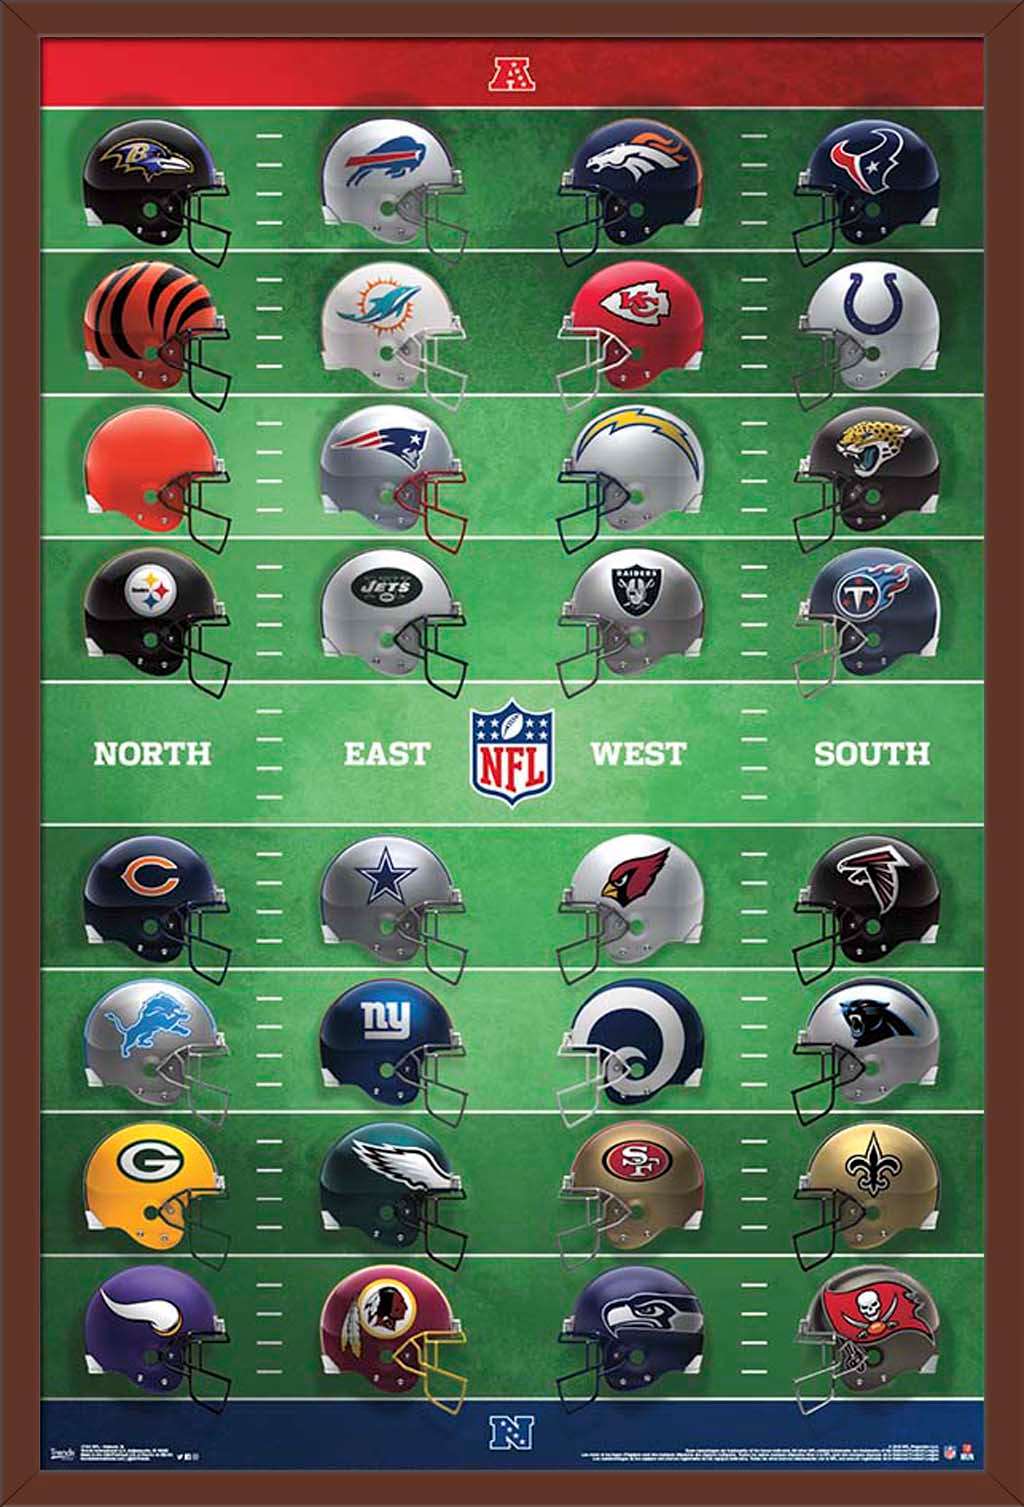 NFL League - Helmets Poster - image 1 of 2